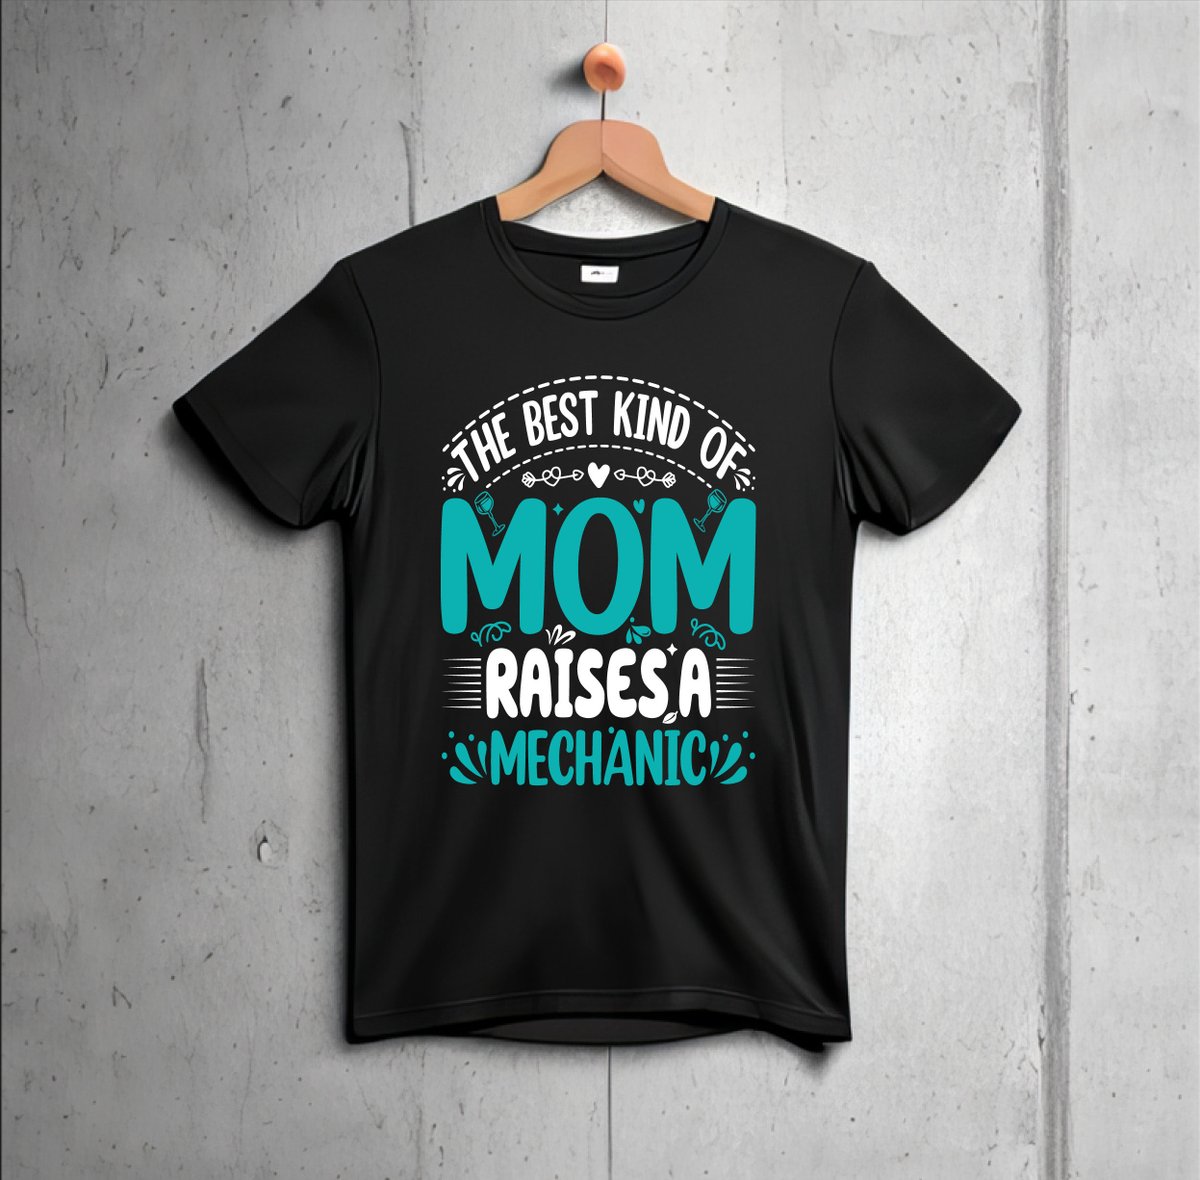 #momtshirt #dadtshirt #etsy #giftsforher #momshirt #customizedshirts #mom #tshirts #momlife #momtshirts #momtee #custommade #etsyshop #smallshop #etsystore #personalizedapparel #jandecreations #personalizedshirt #customapparel #momtees #mothersday #giftformom #tshirtdesign